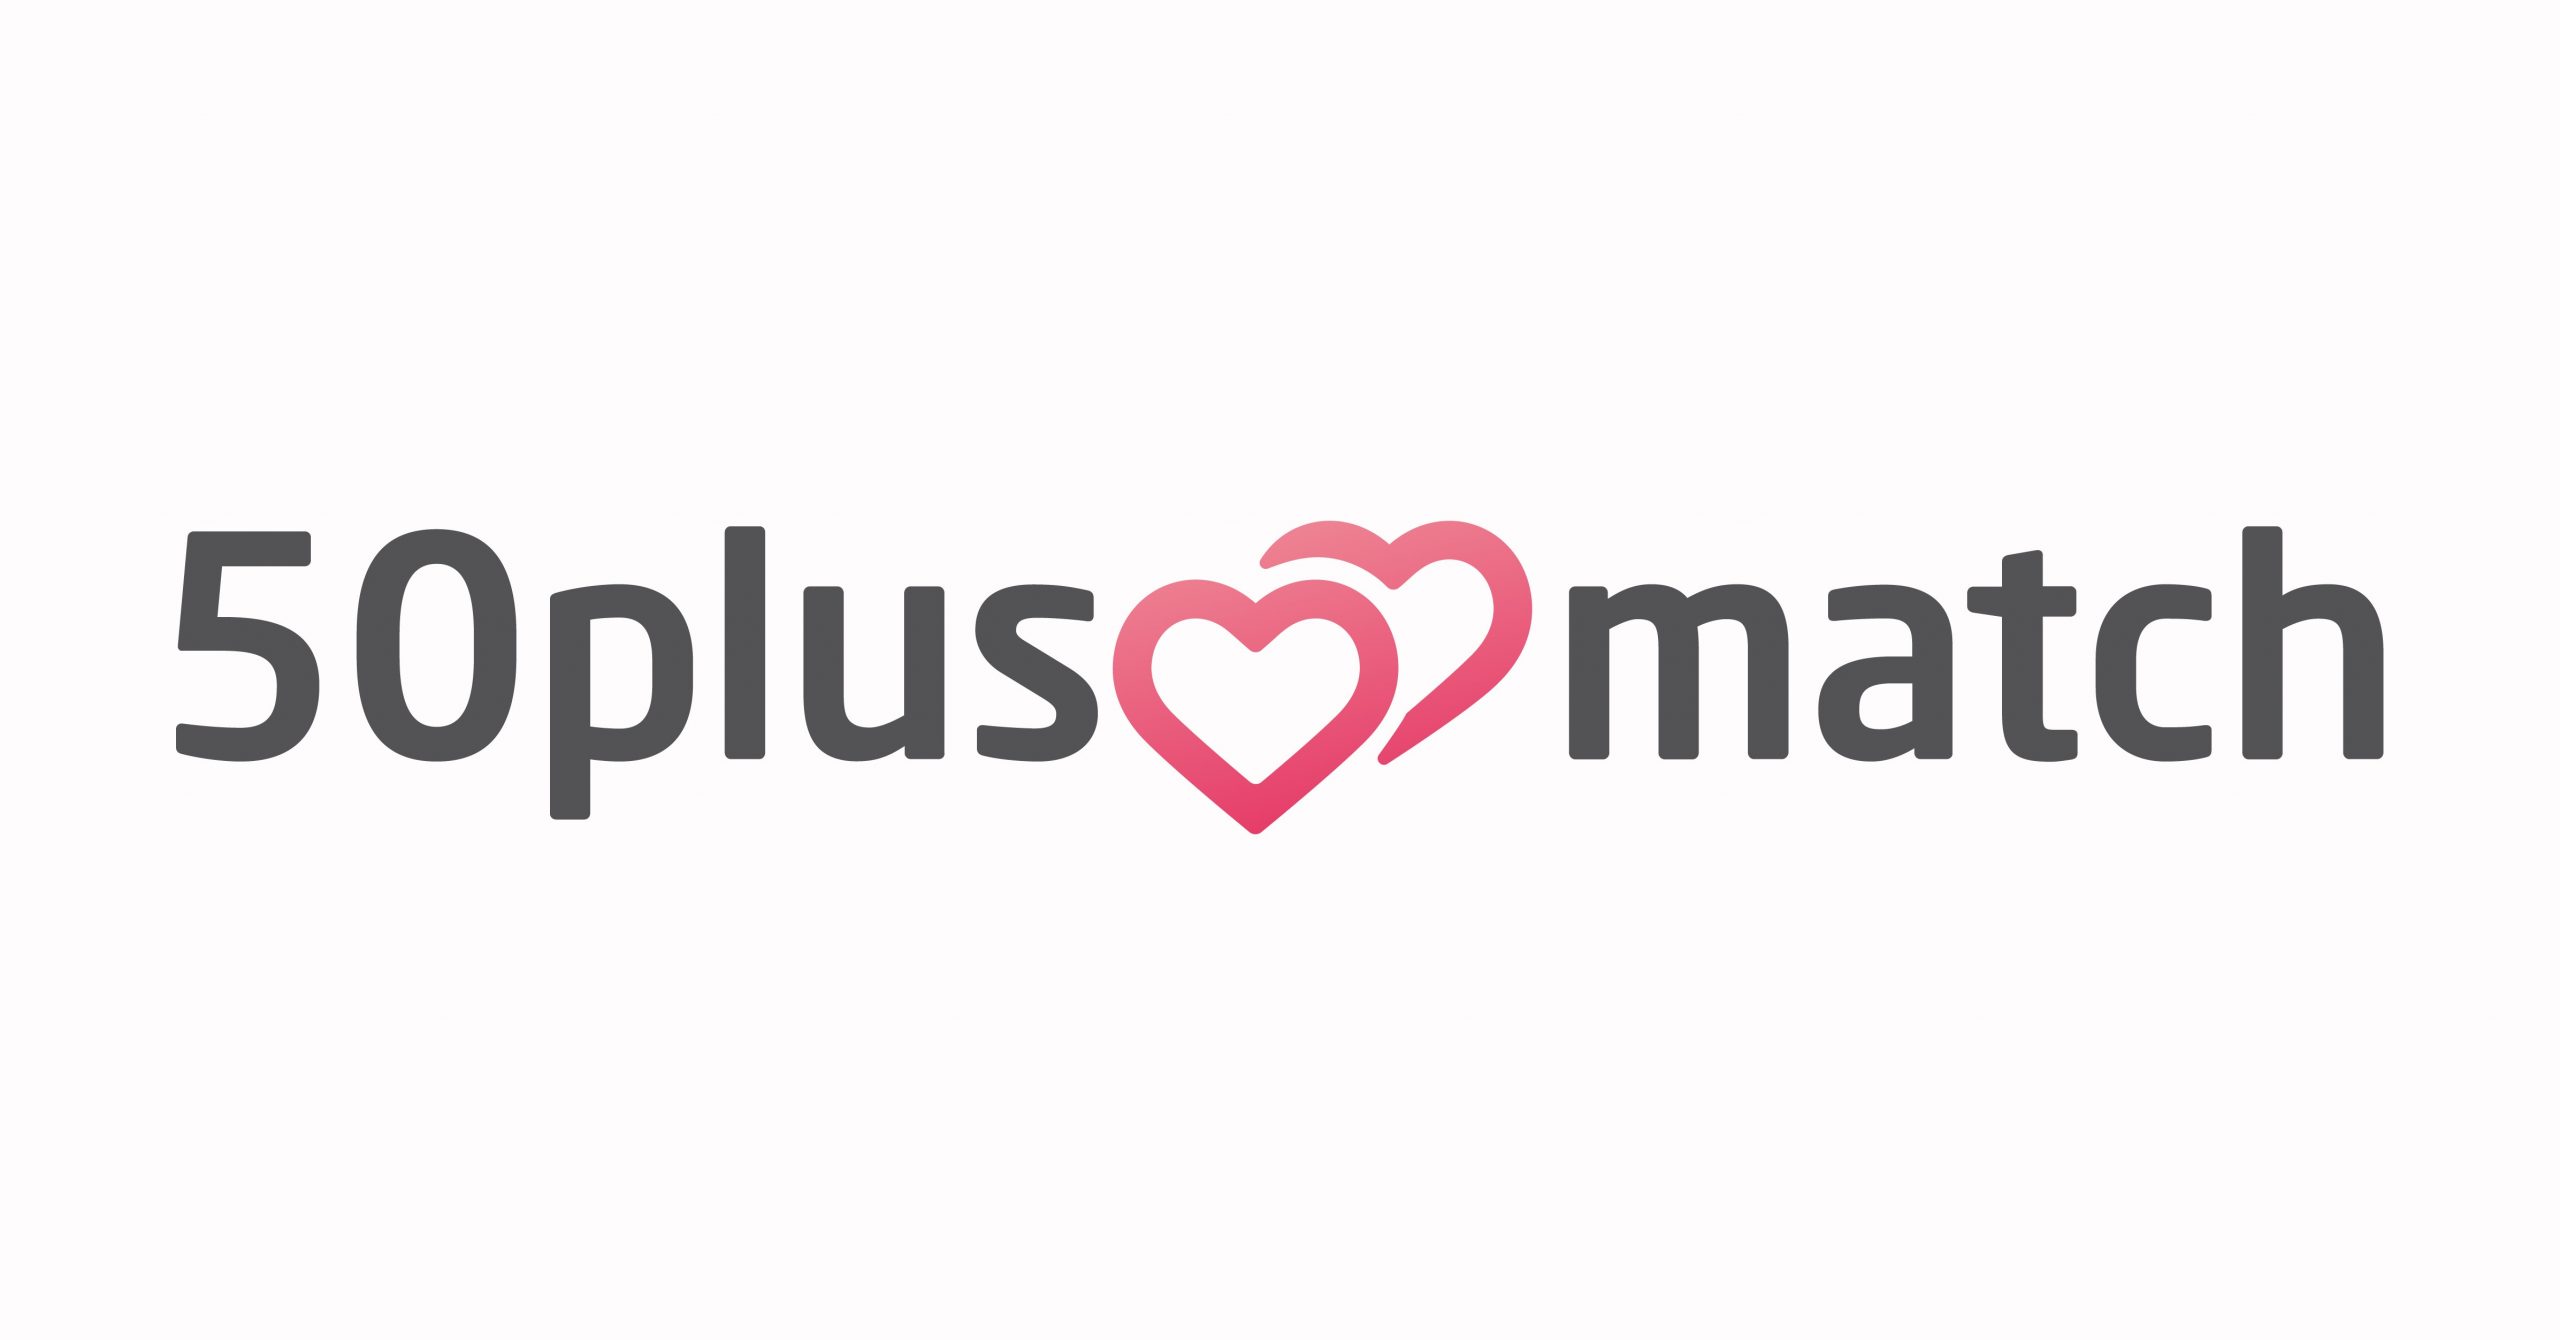 Dating site 50plusmatch.nl